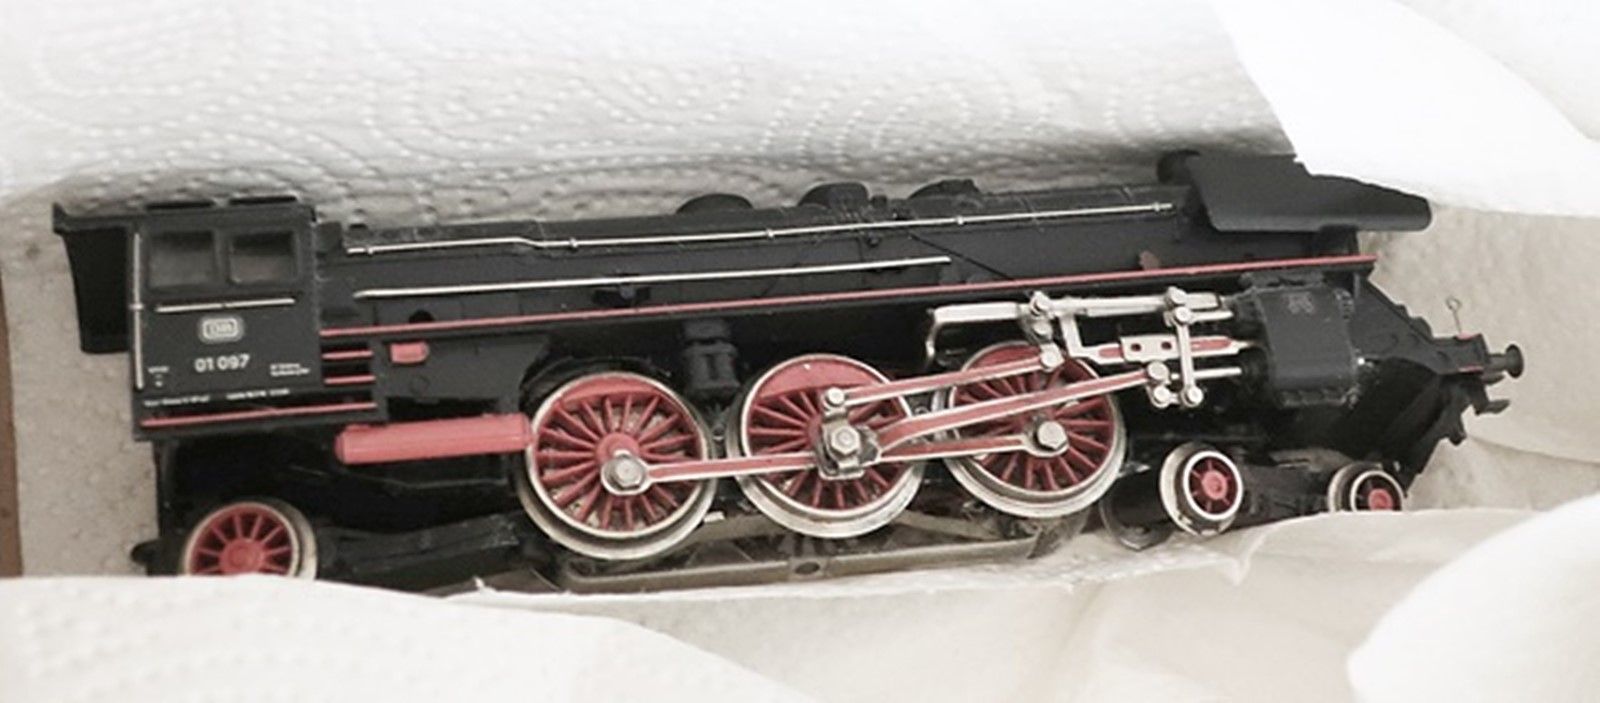 Null Locomotive Märklin sans carton, modèle 0197, échelle H0